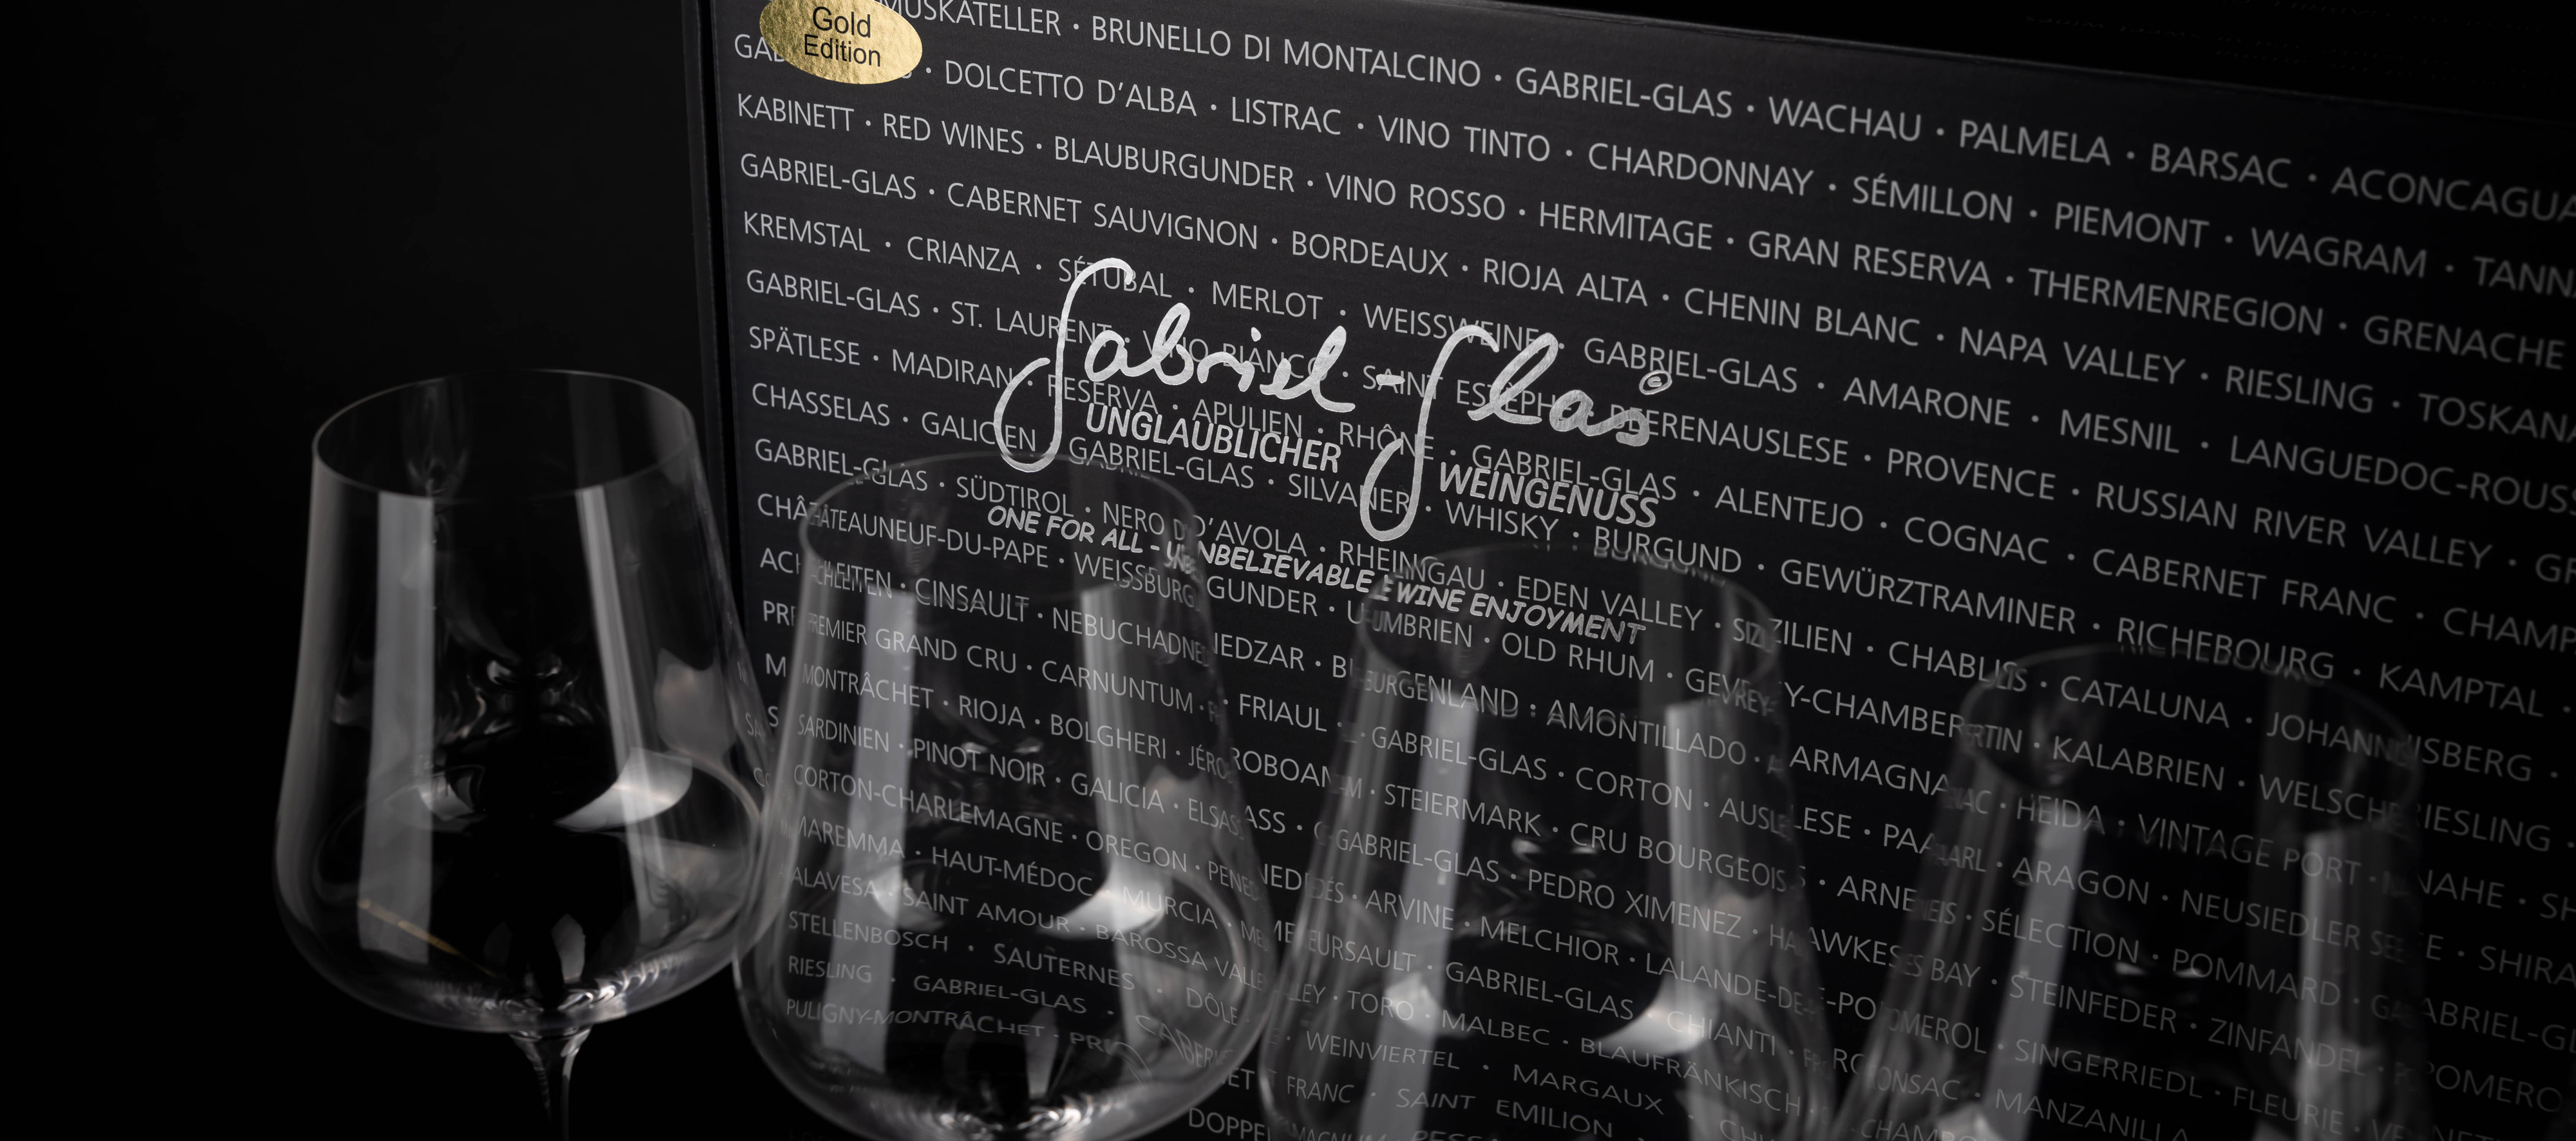 Gabriel-Glas // StandArt (Two Glasses) - Gabriel-Glas - Touch of